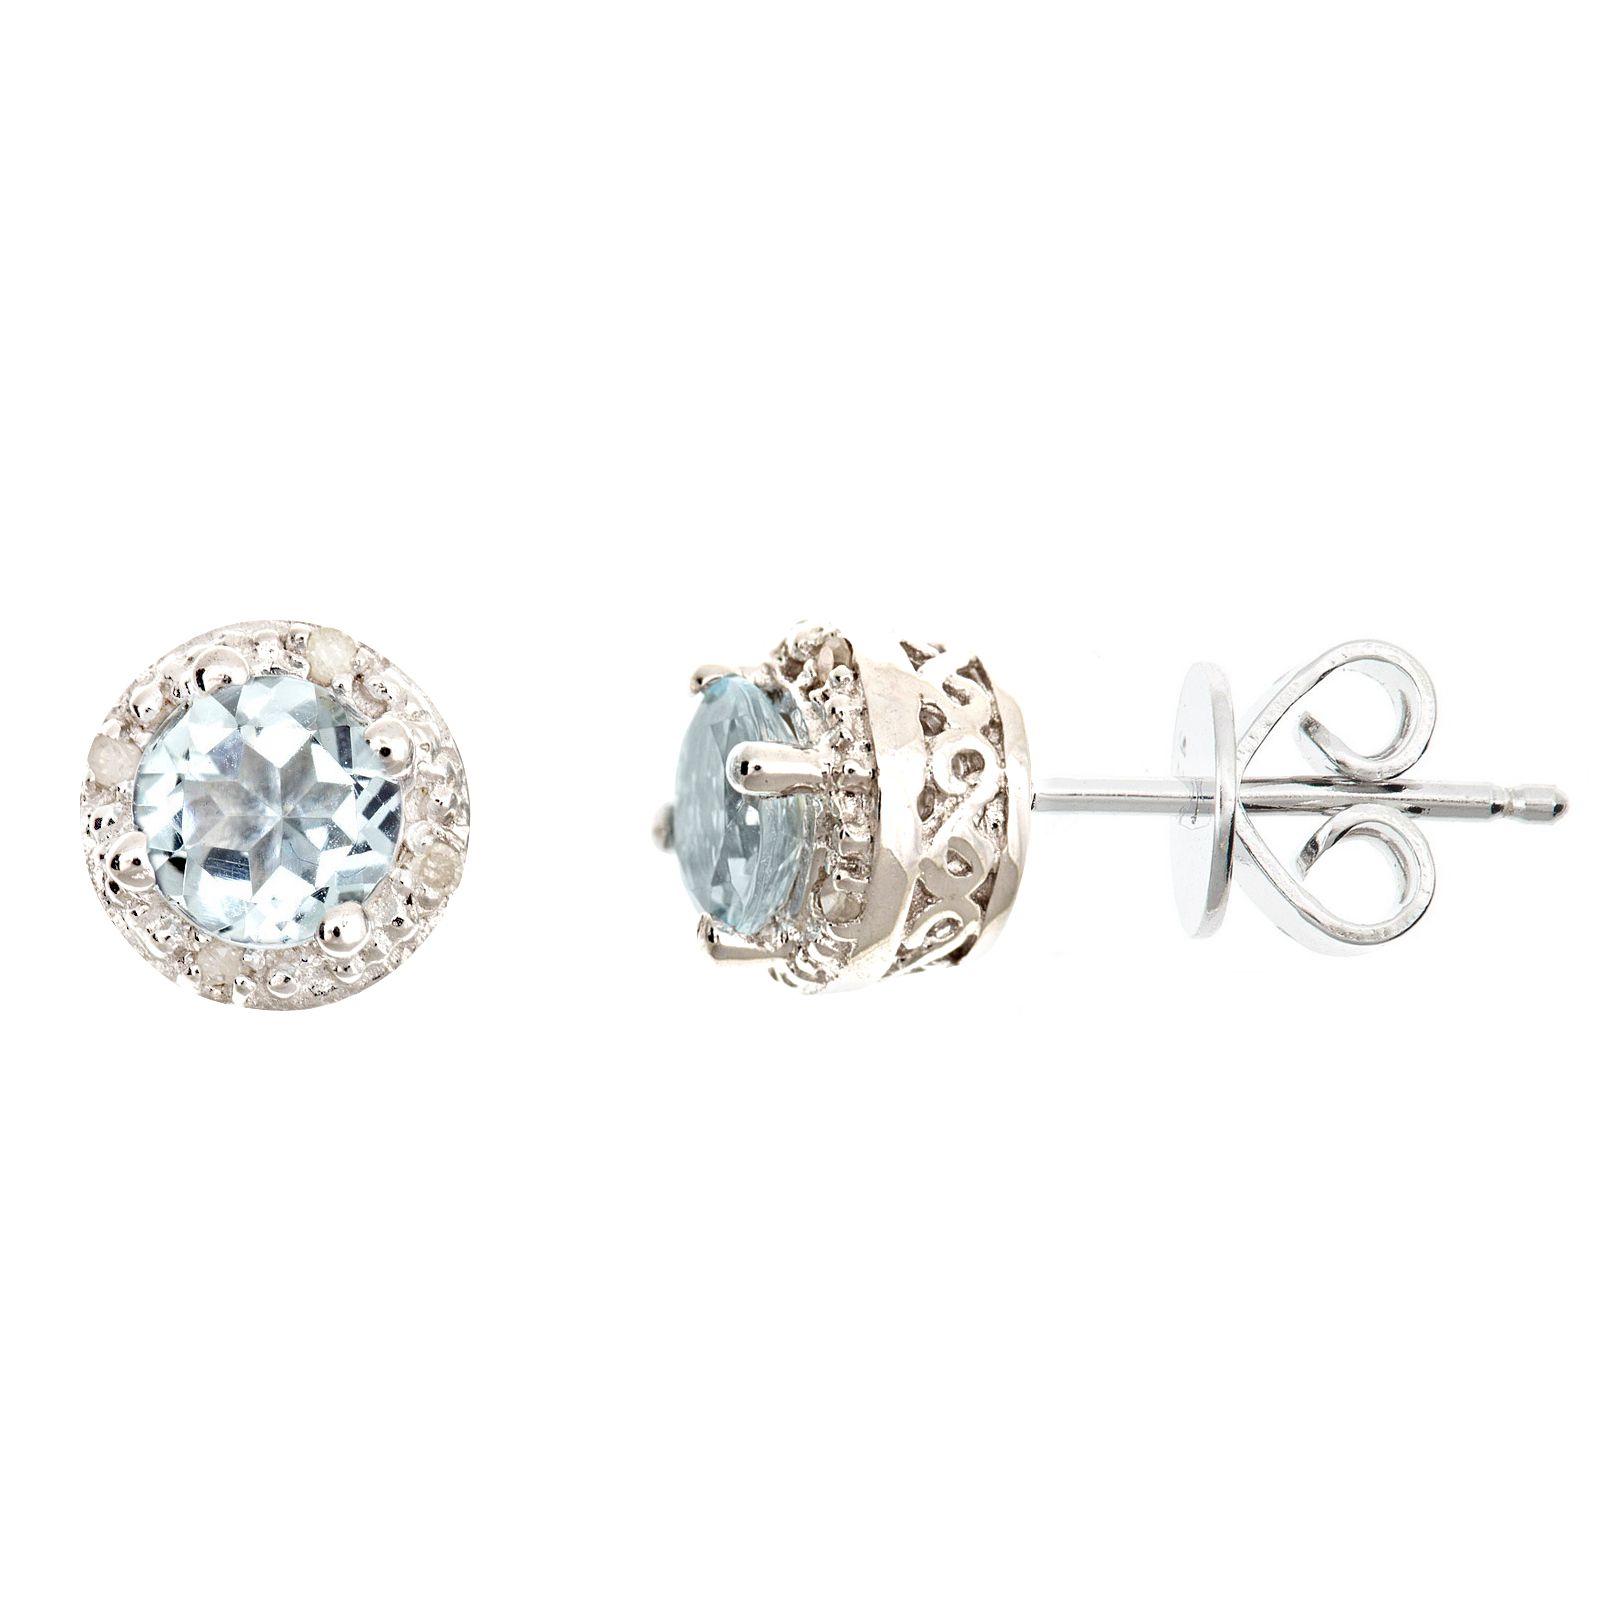 Ladies Sterling Silver Genuine Gemstone and Diamond Accent Stud Earrings